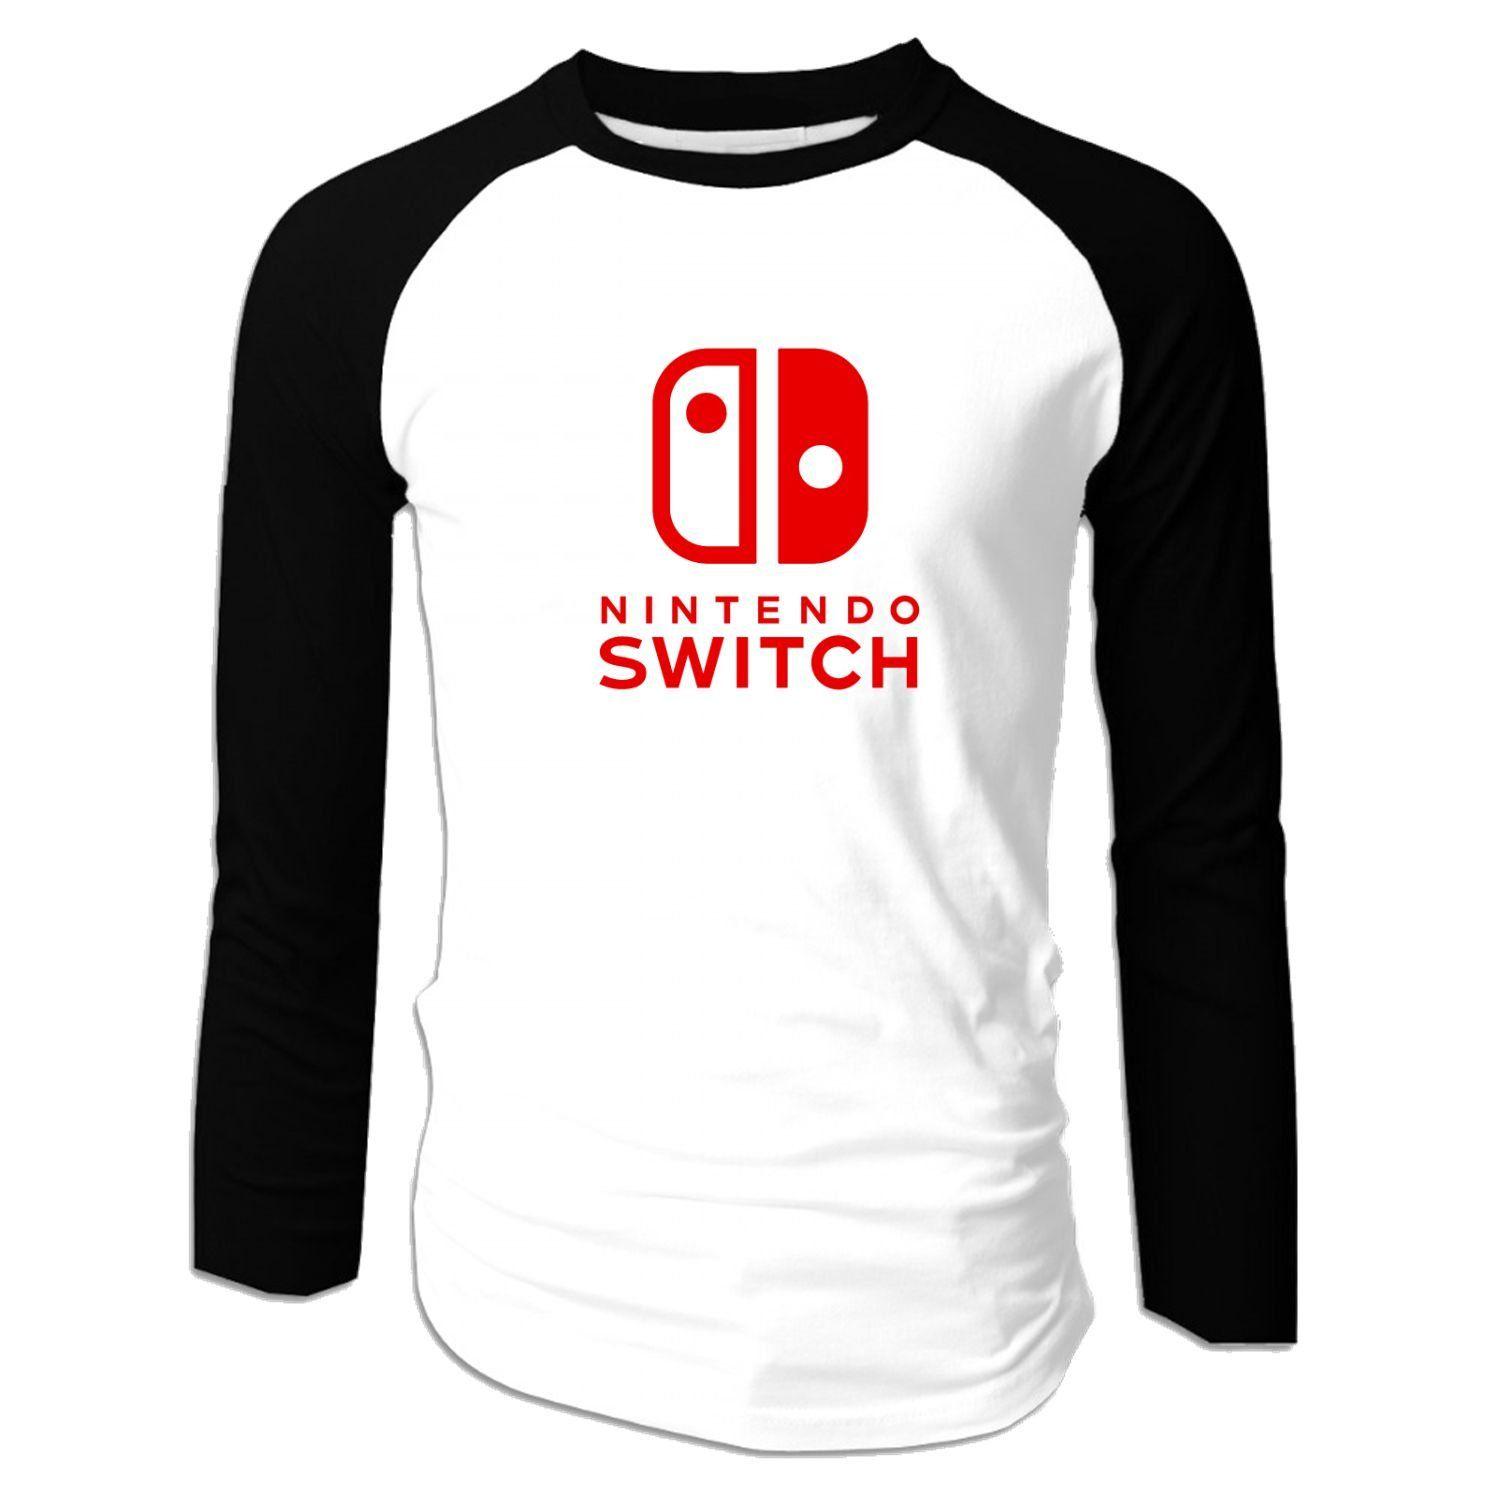 Nintendo Switch Logo - Amazon.com: Men's Neck Cotton hot long sleeve Raglan tee Nintendo ...